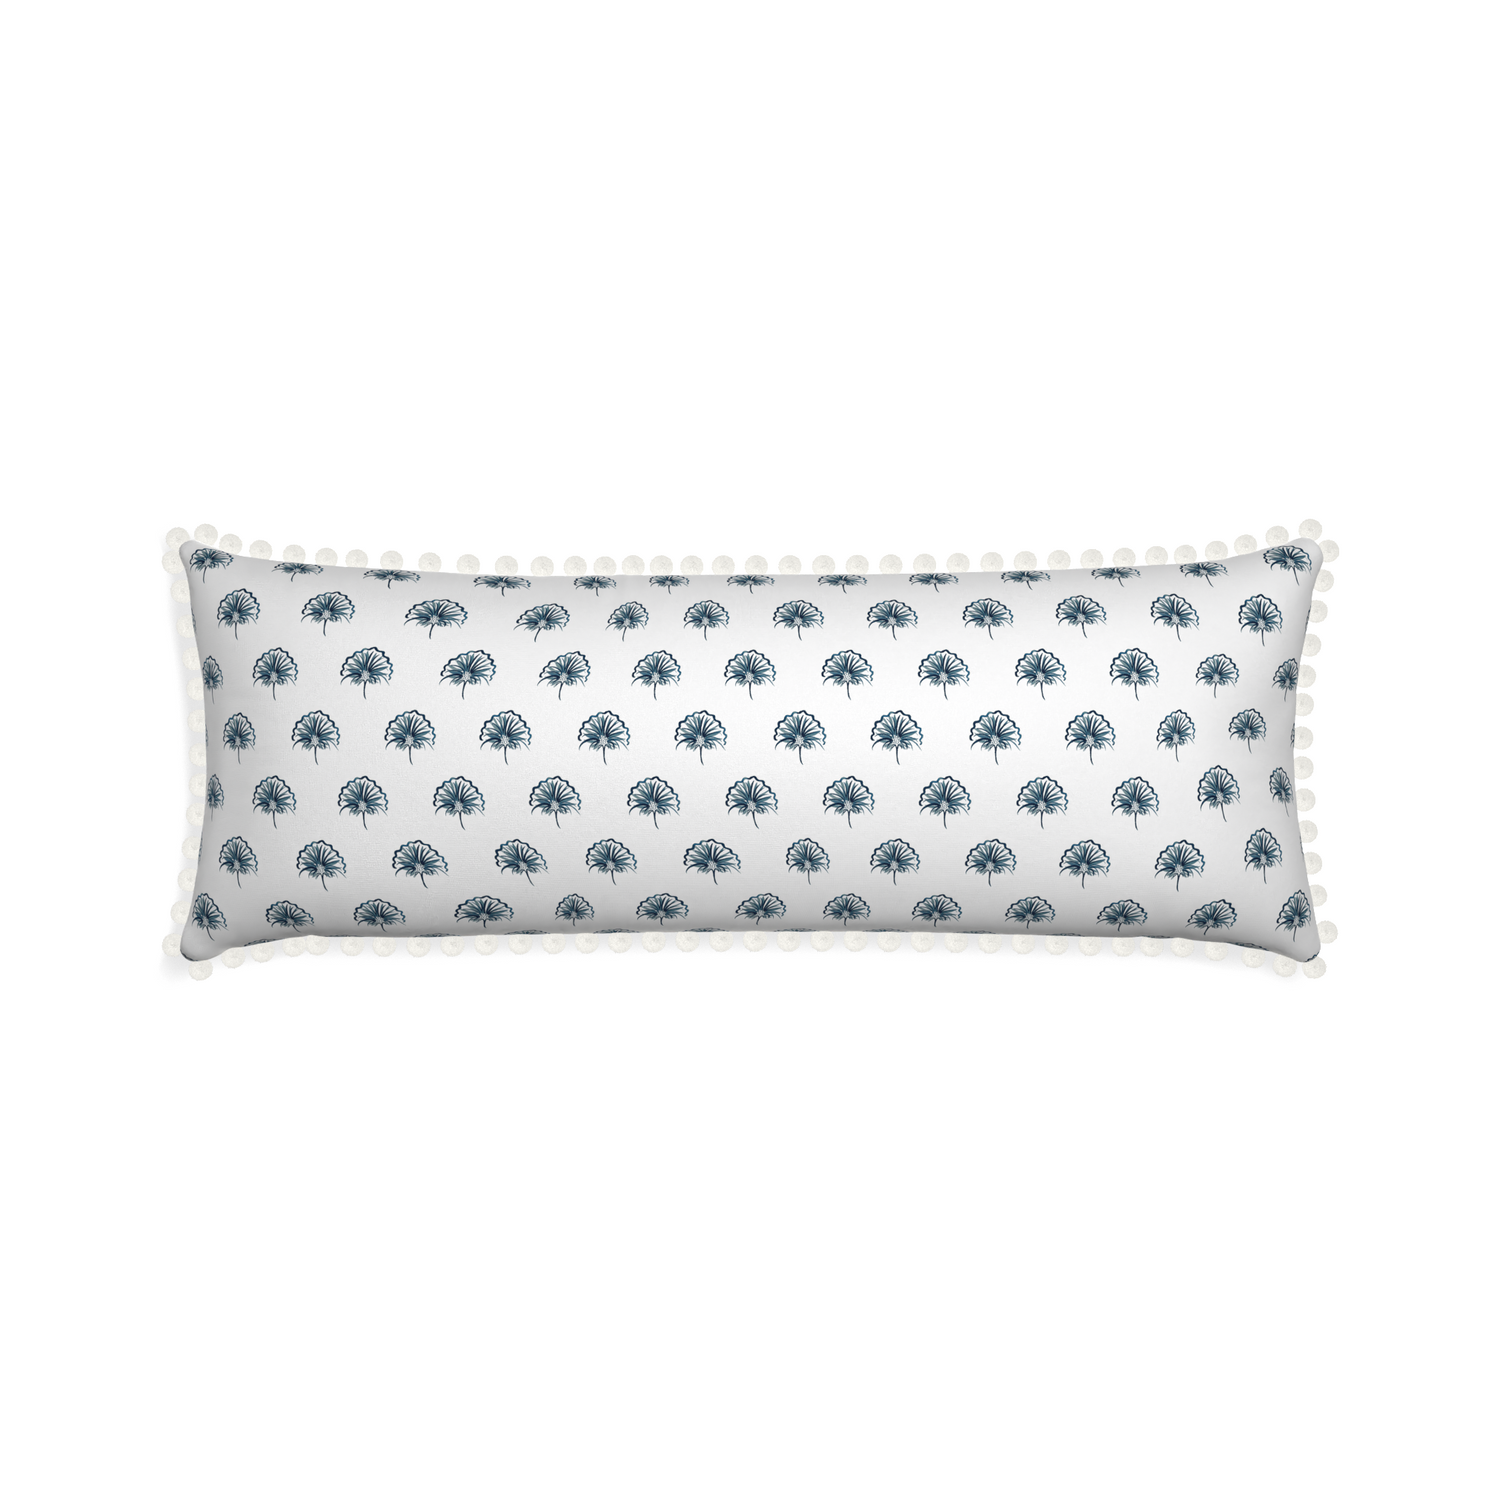 Xl-lumbar penelope midnight custom pillow with snow pom pom on white background